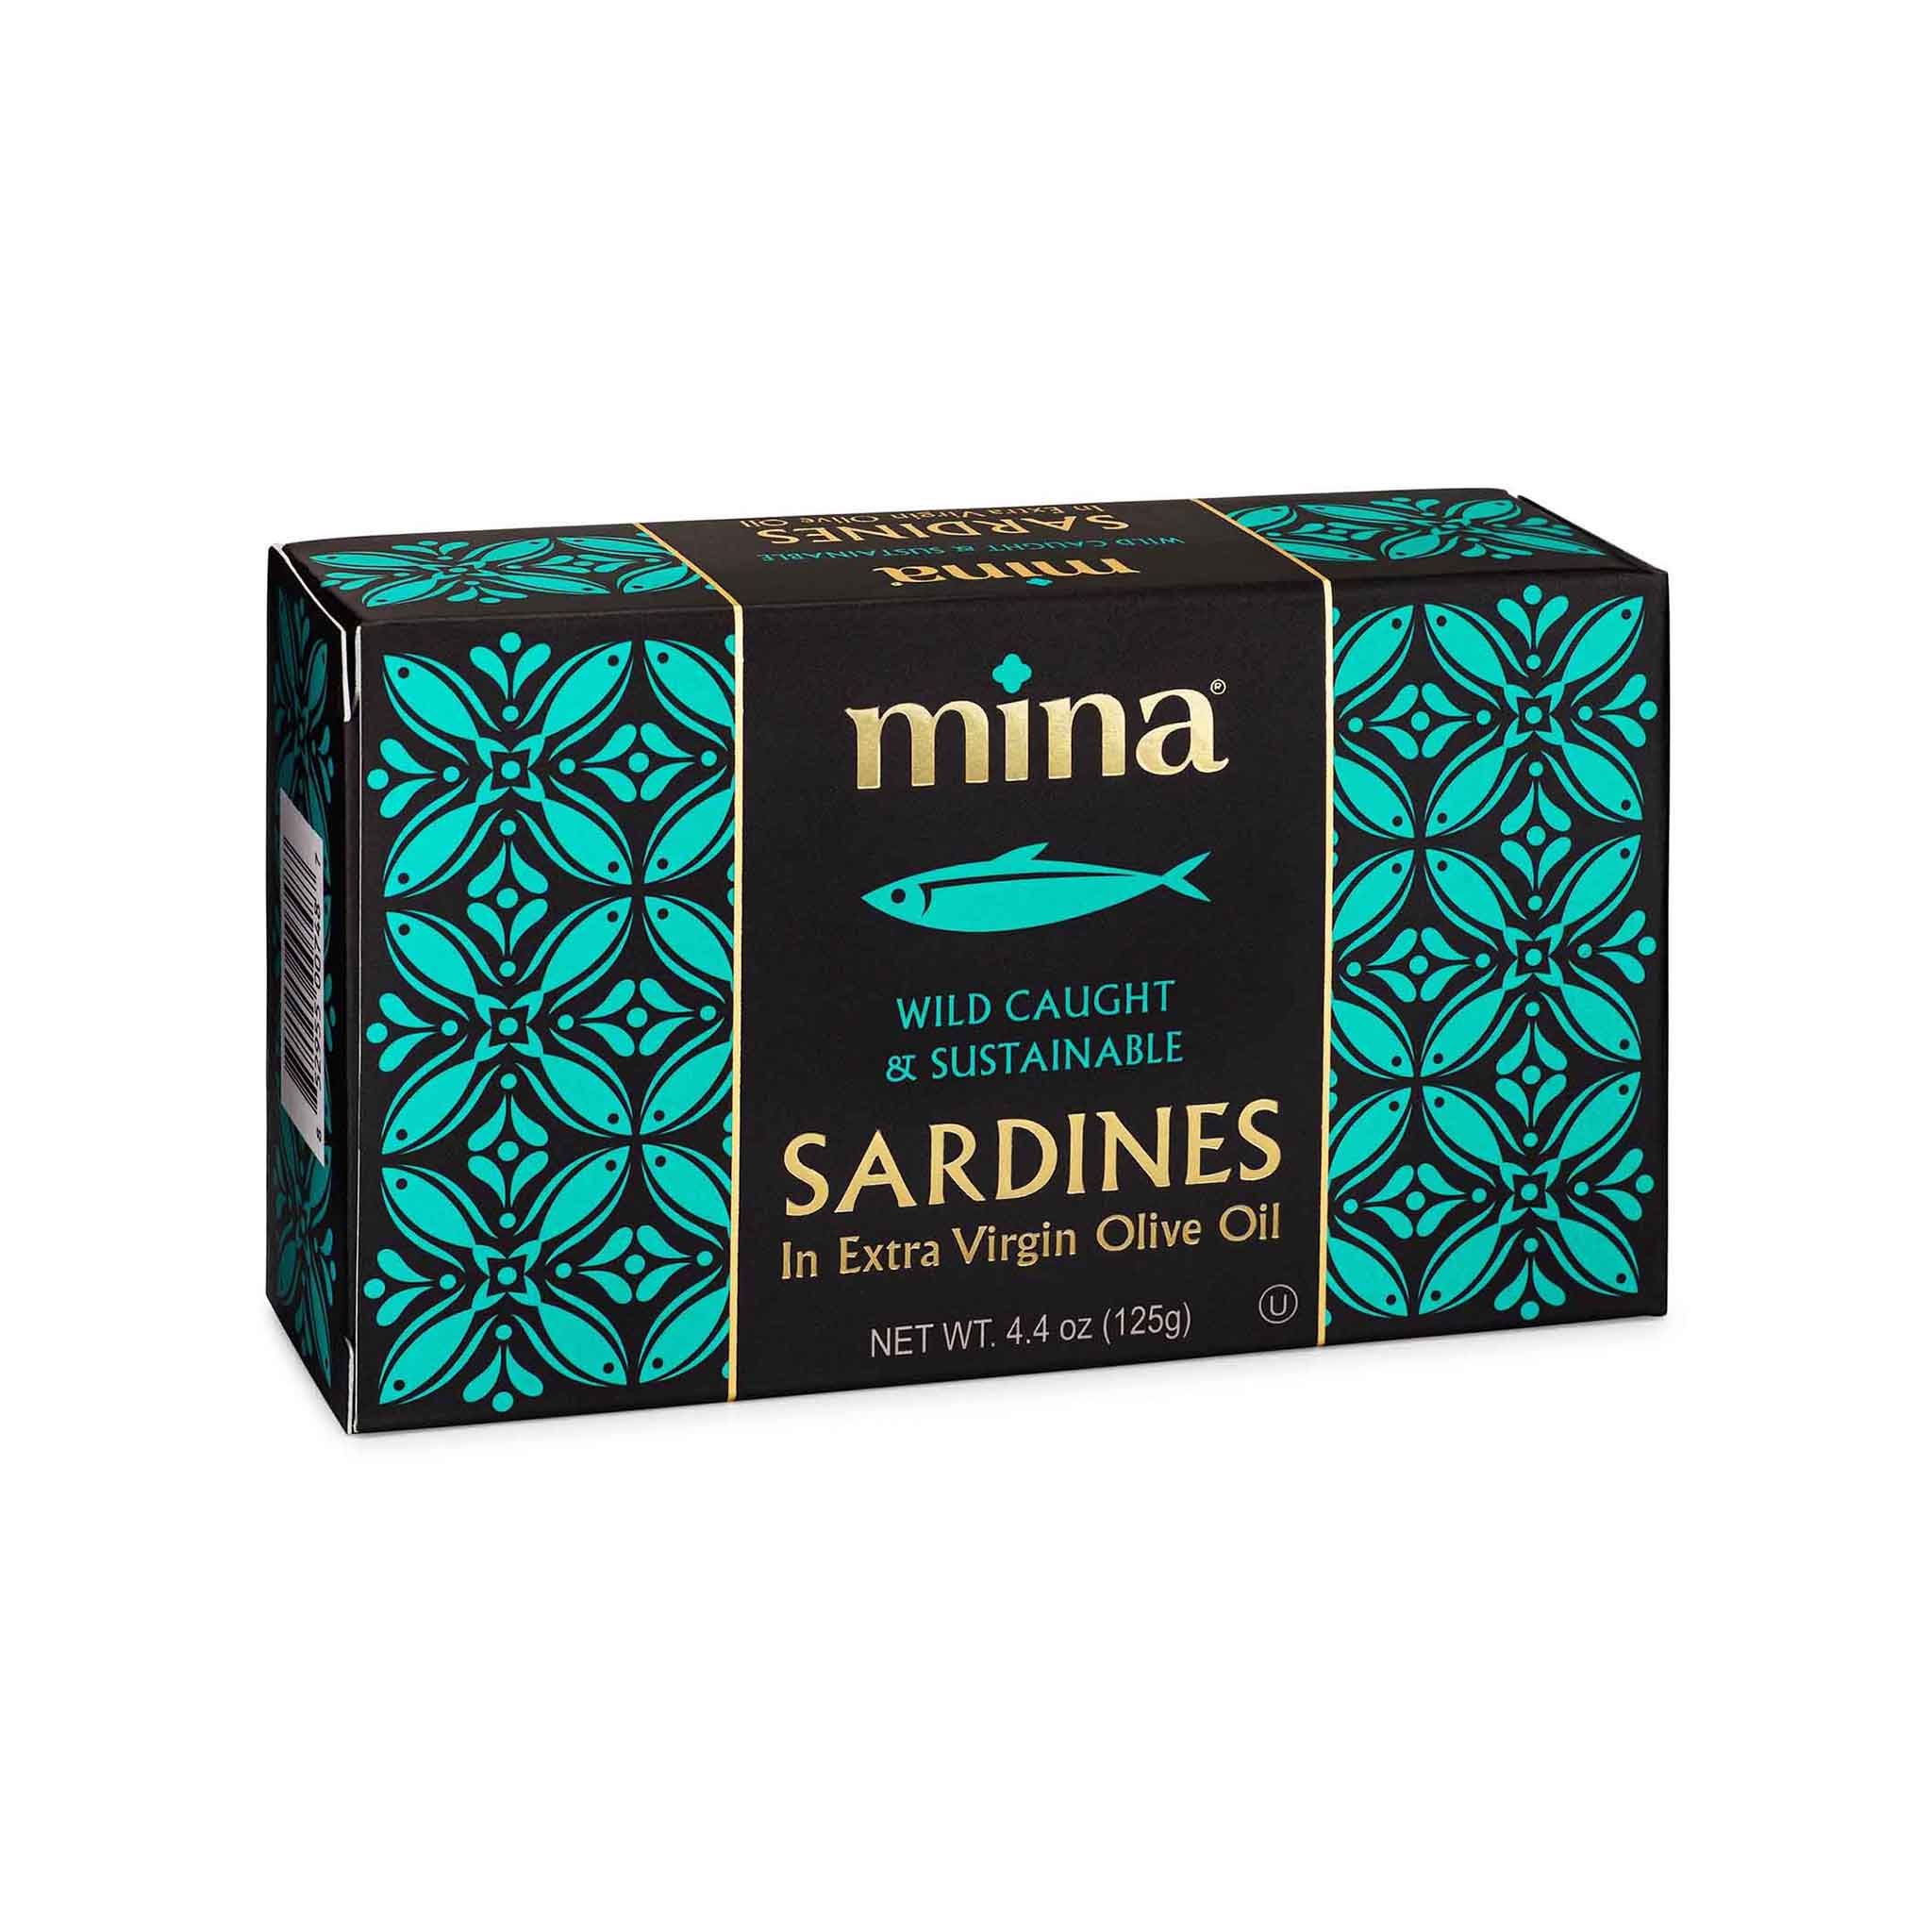 Mina Sardines in Extra Virgin Olive Oil